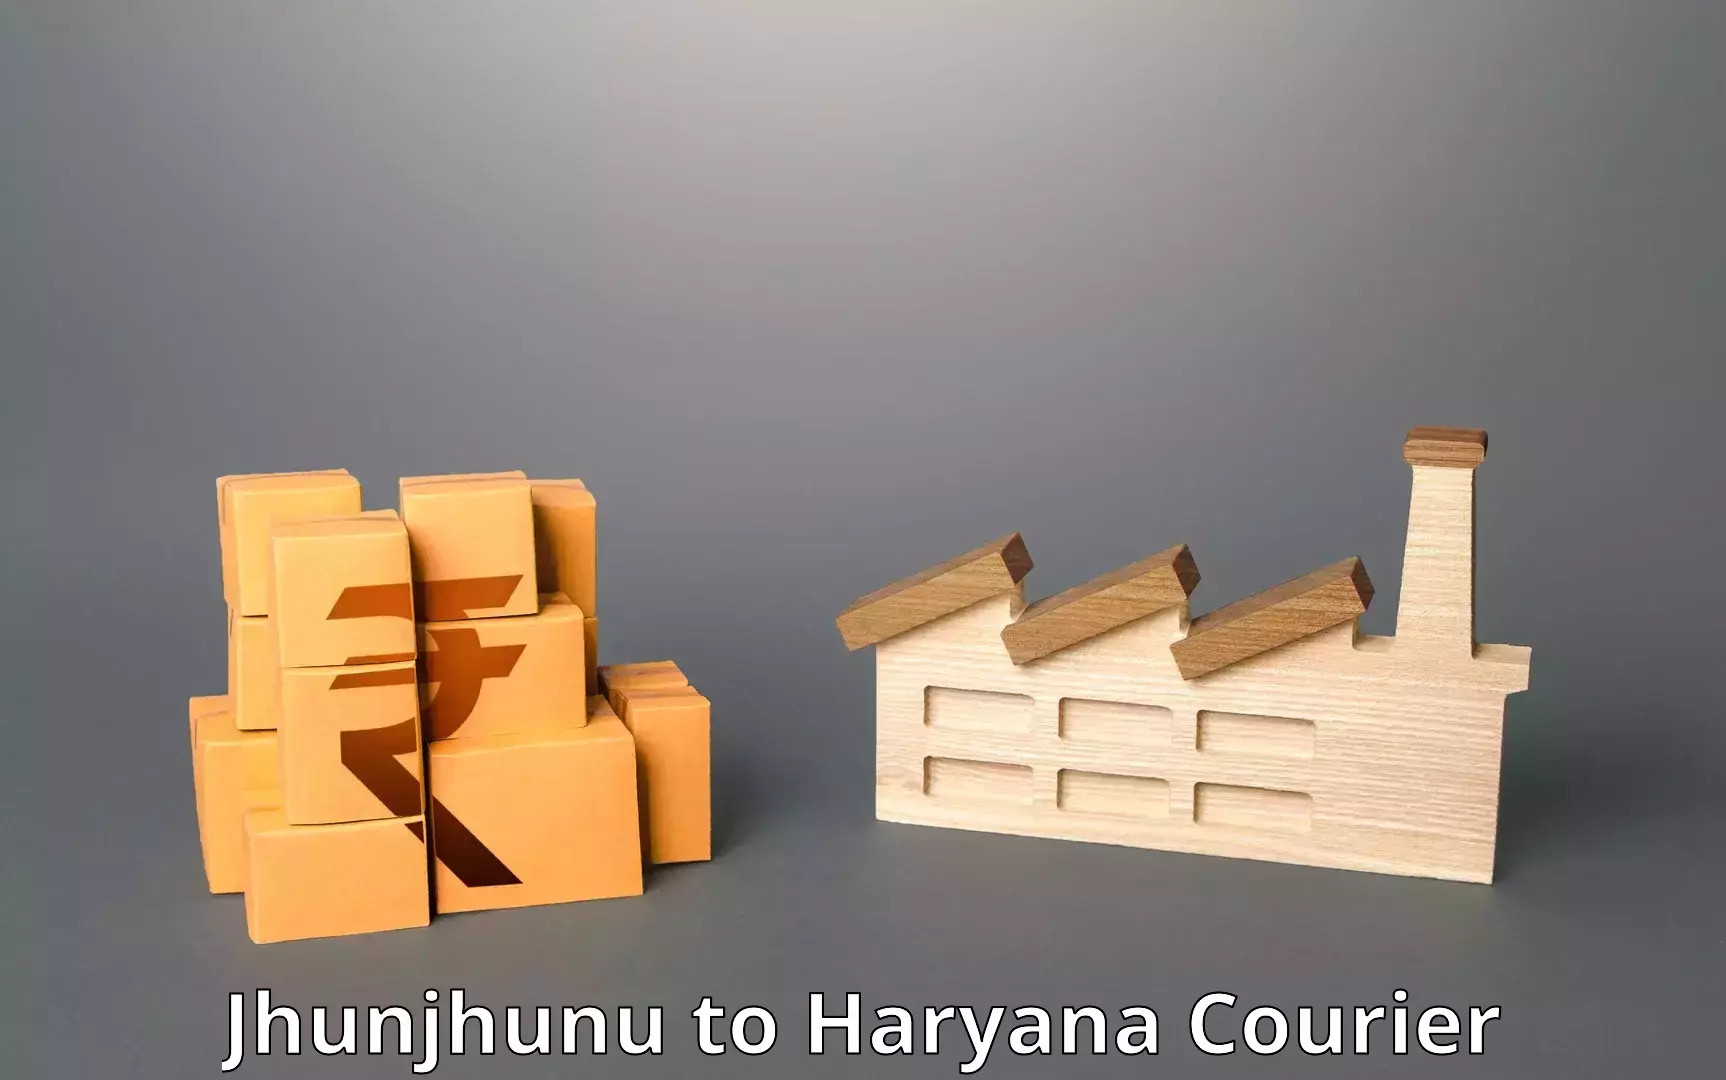 Package delivery network Jhunjhunu to NCR Haryana